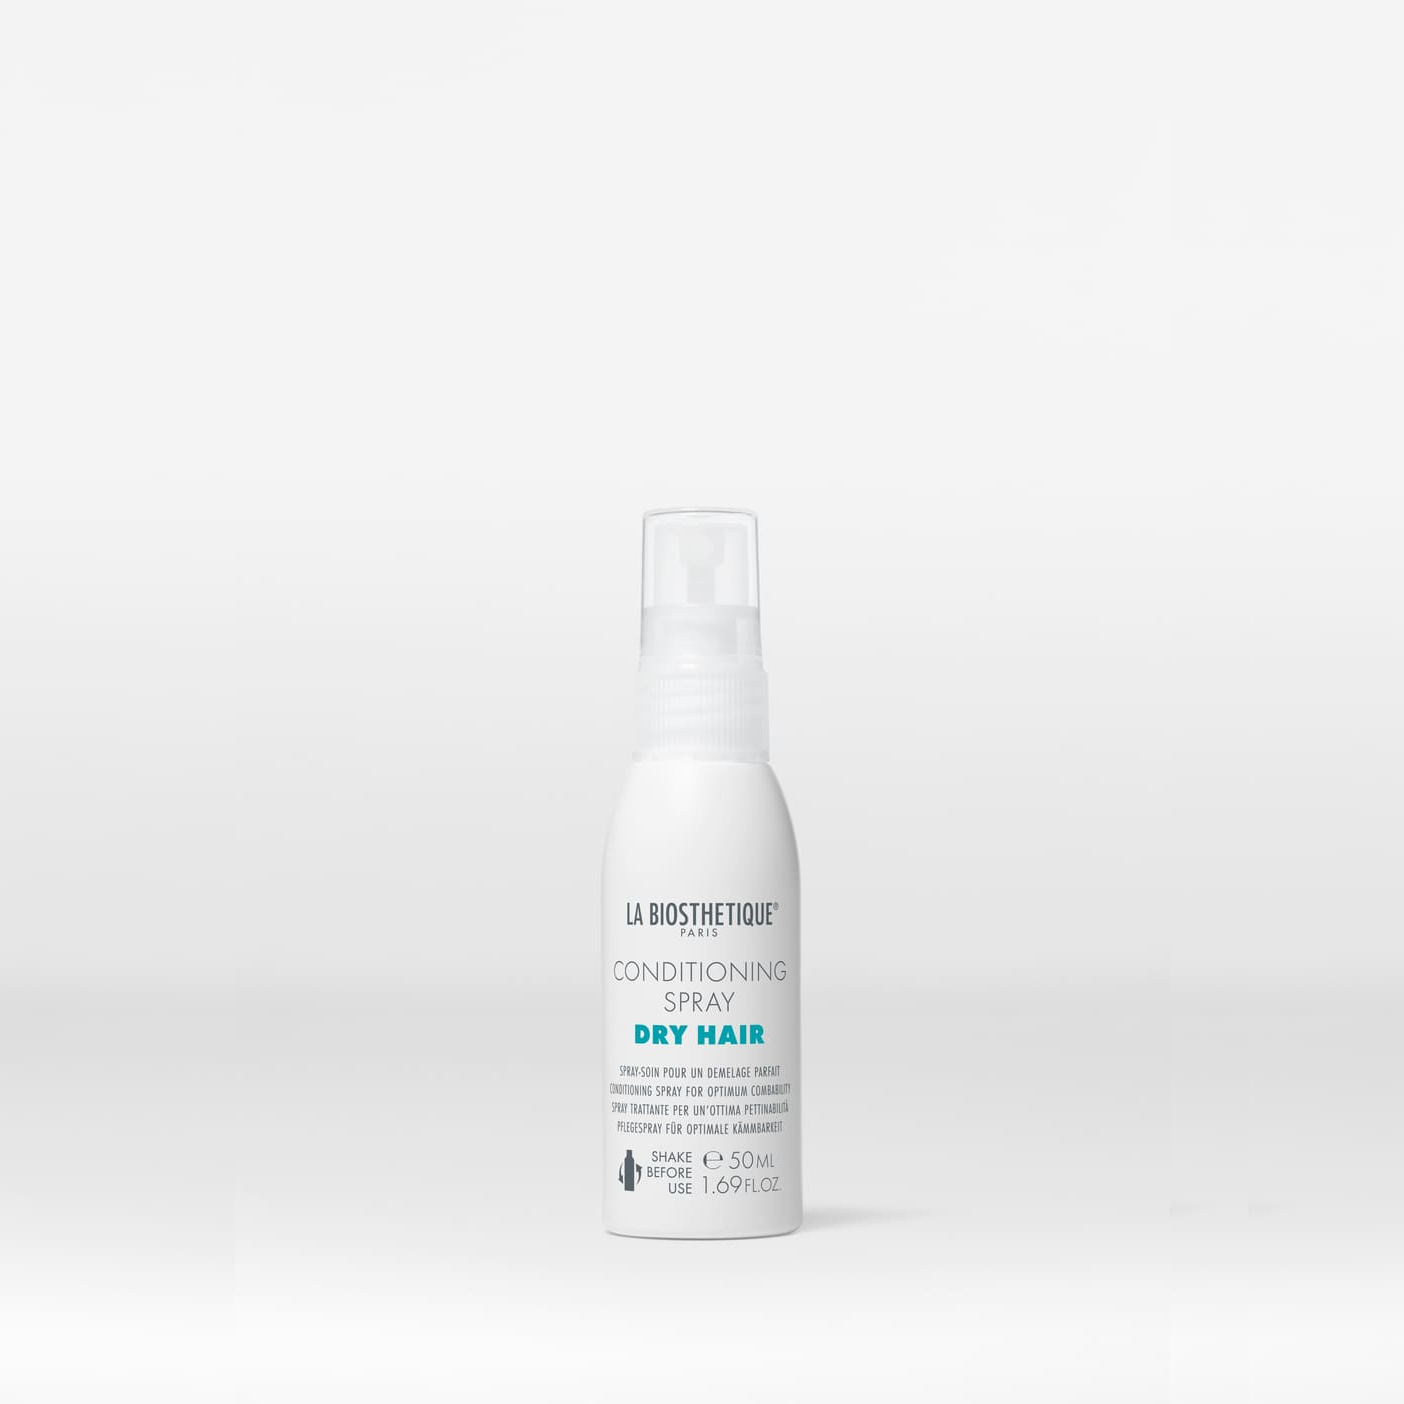 La Biosthetique's Dry Hair Conditioning Spray - 50ml